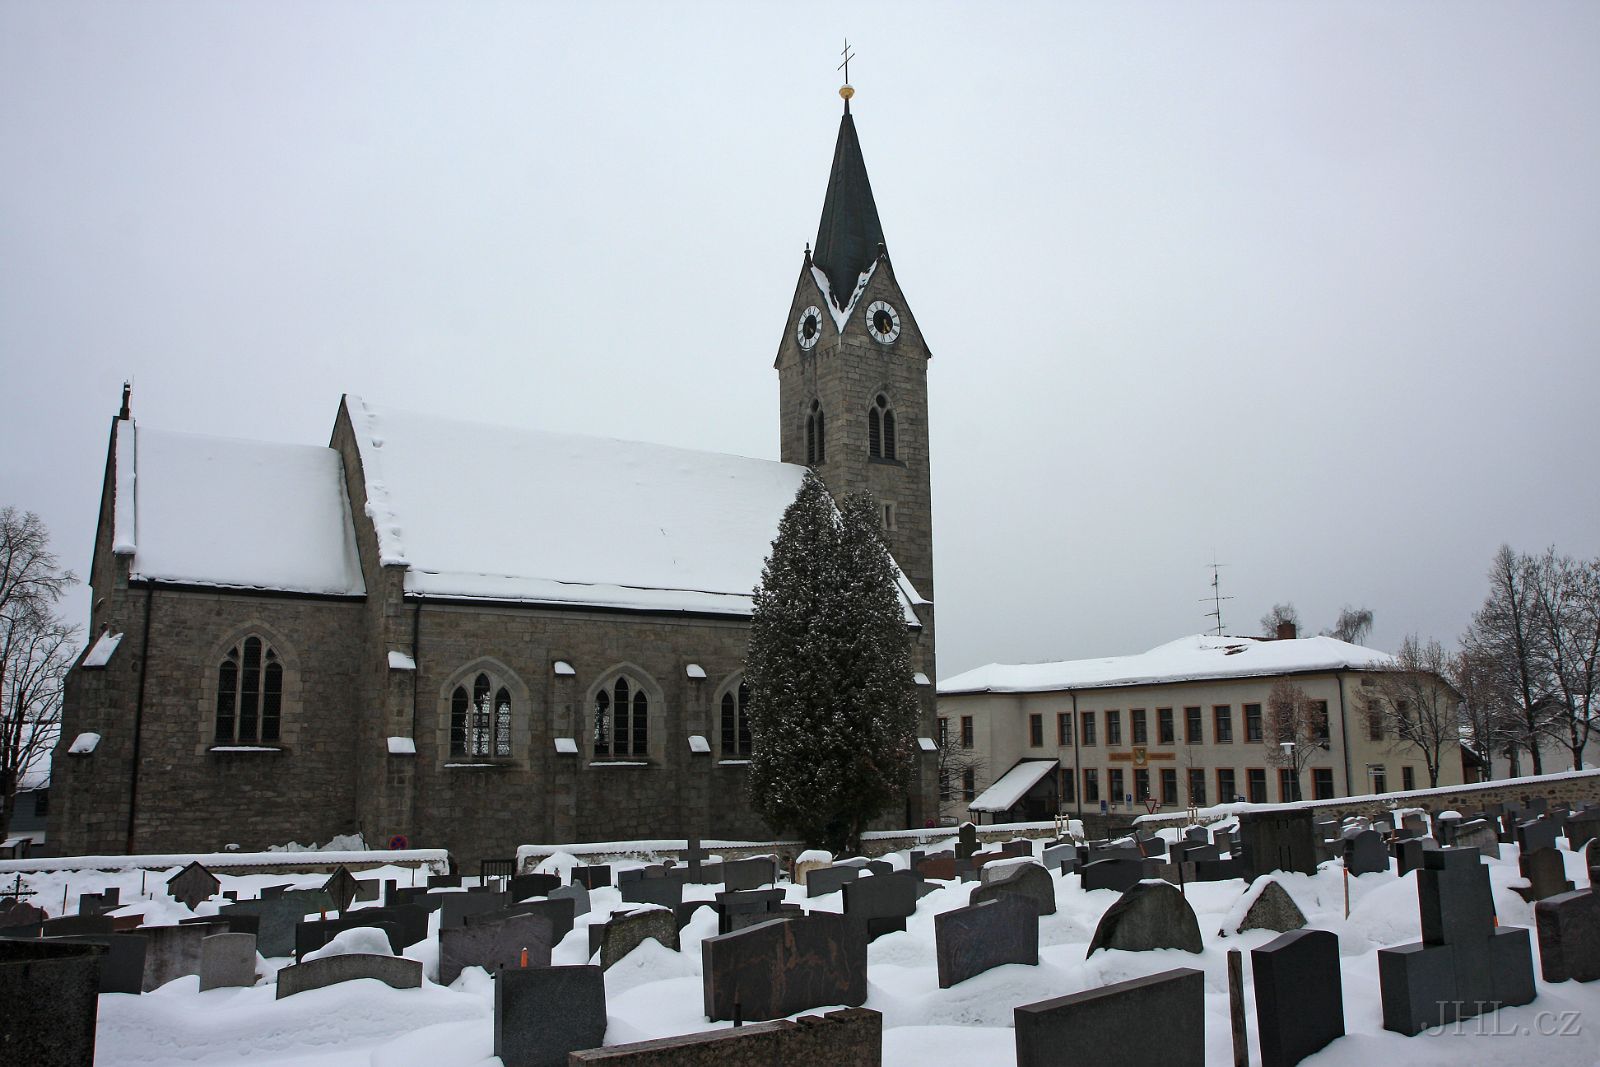 130224cc041.JPG - kostel sv. Anny, Neuschönau / church St. Anna, Neuschönau